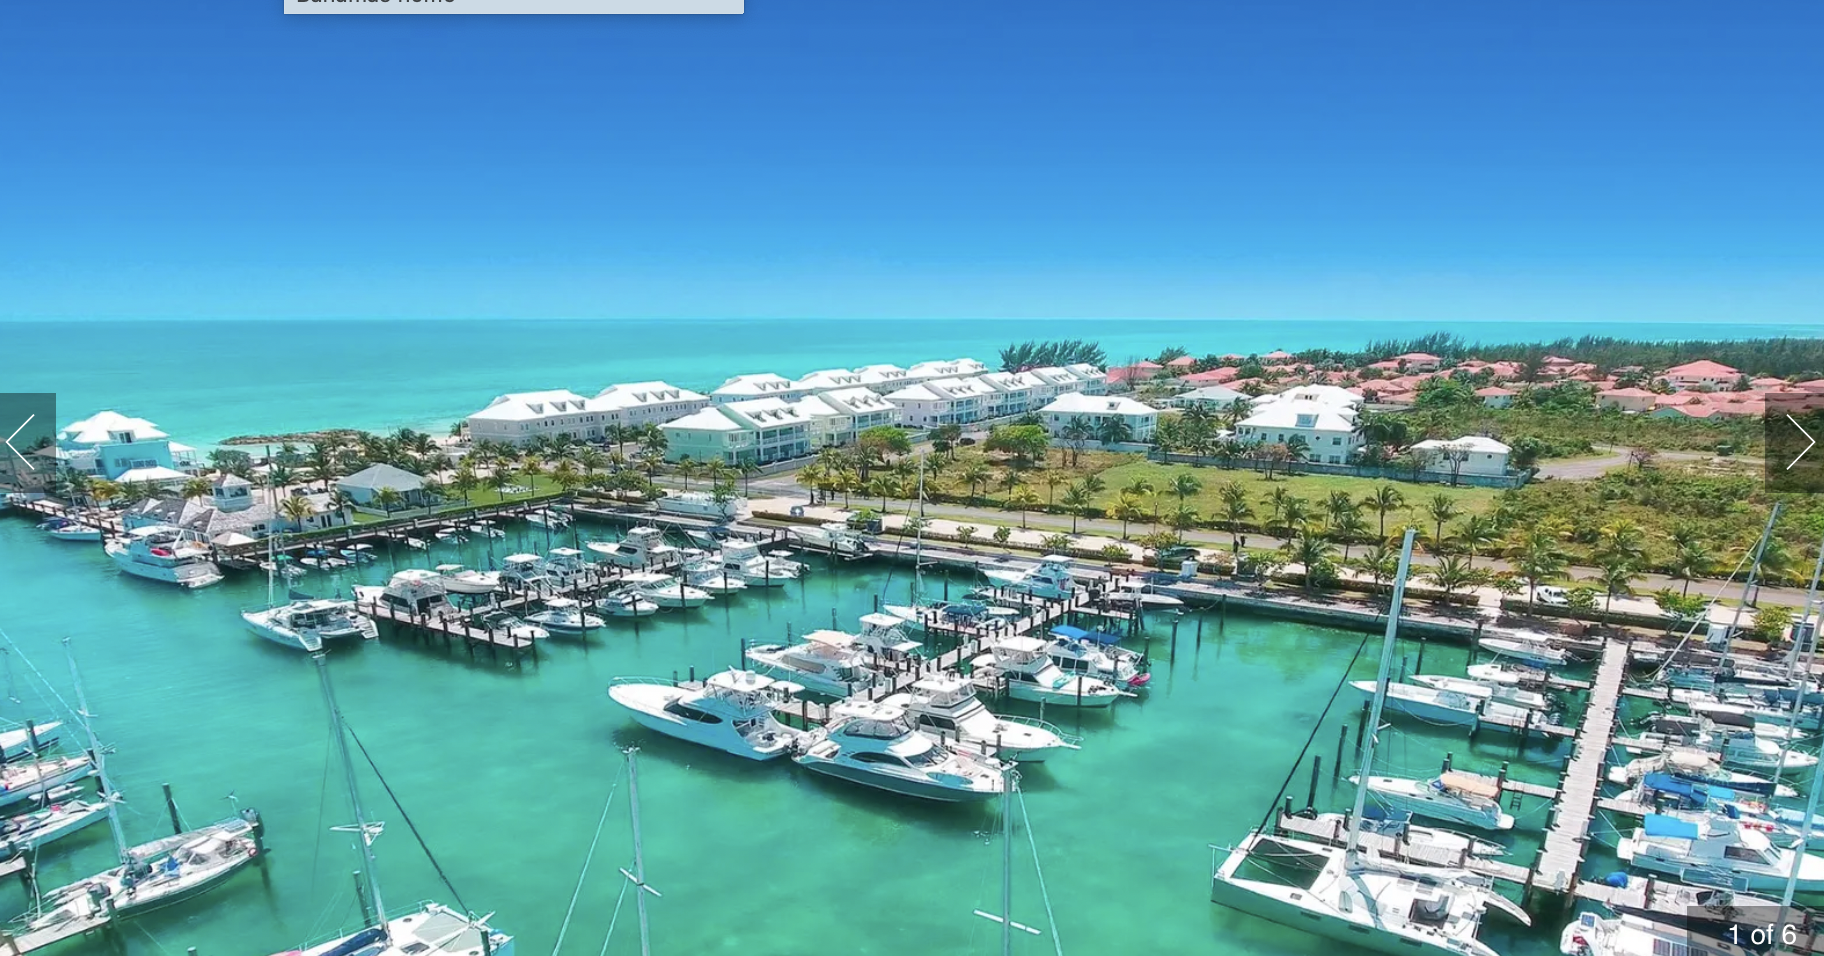 Palm Cay Marina - One Marina Screenshot 2022 01 30 at 11.07.27